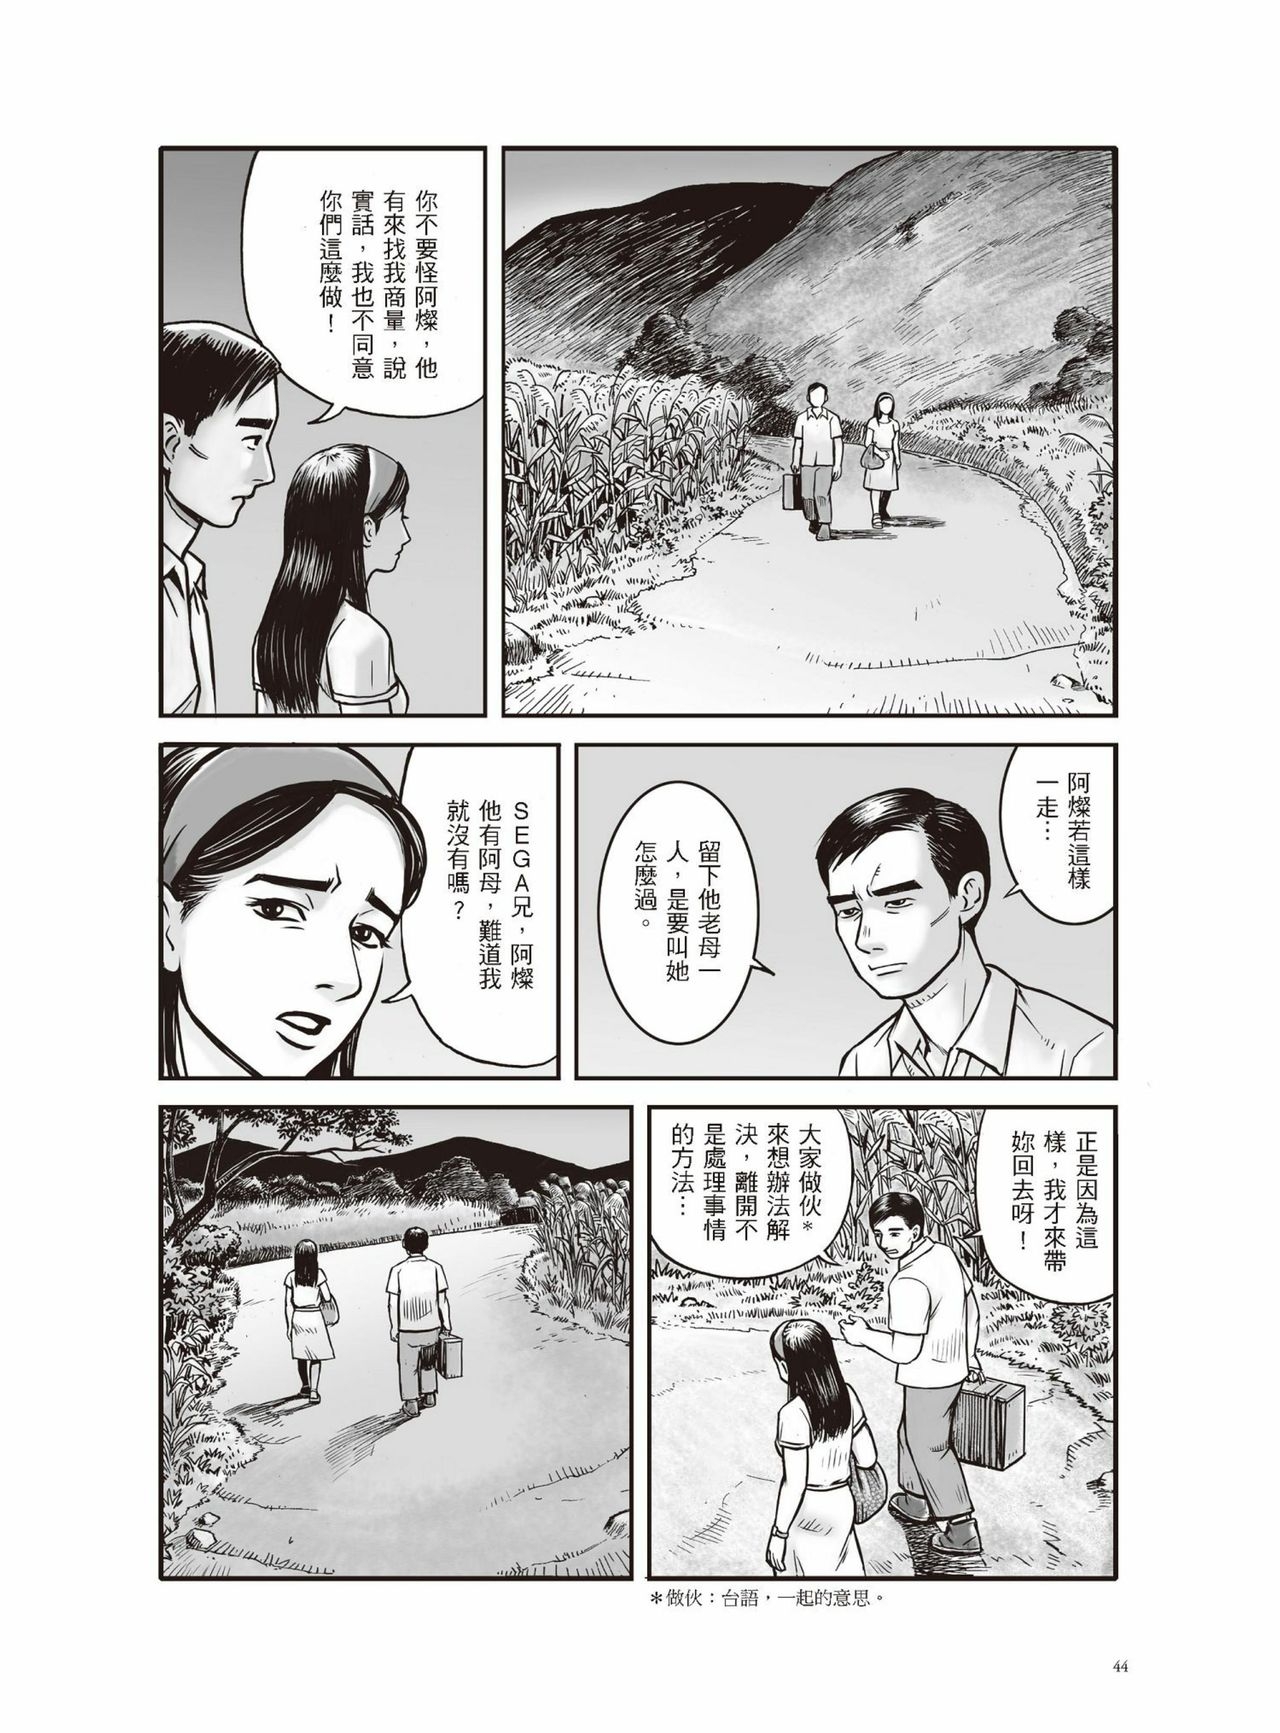 [LI,HUNG-CHIN] Tousan - A Borrowed Life|多桑 [Chinese] 43